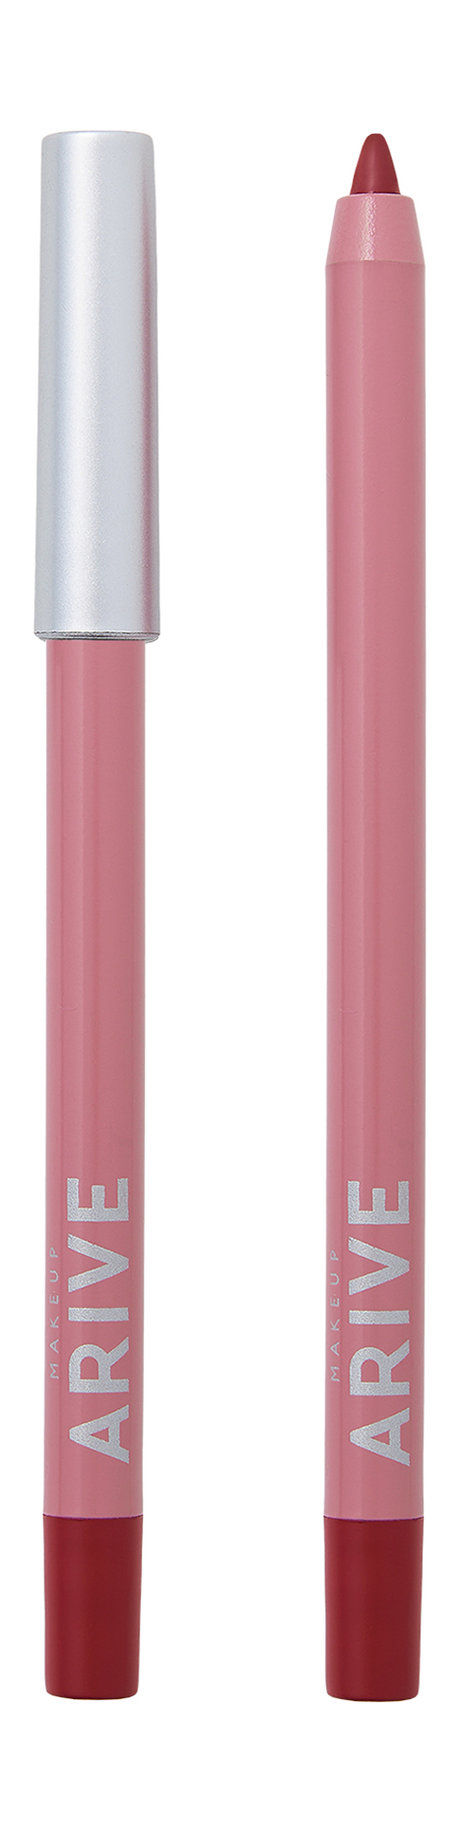 arive makeup creamy lip pencil